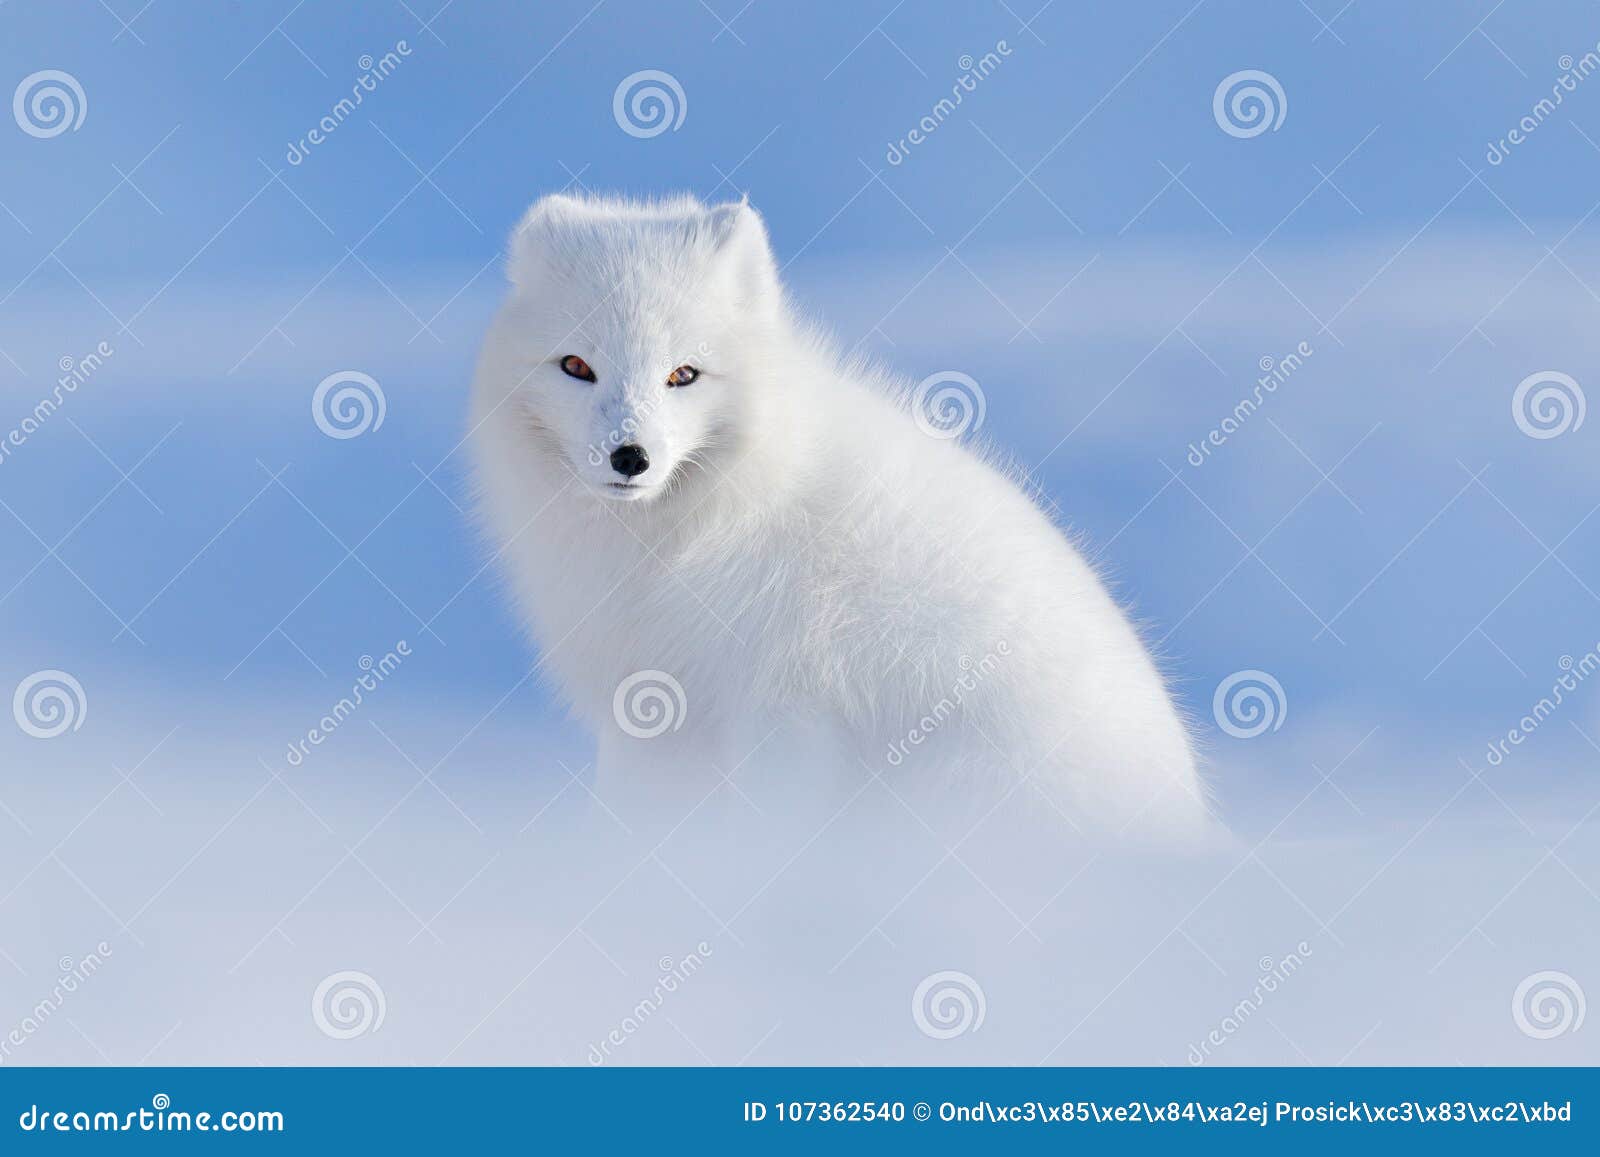 white polar fox in habitat, winter landscape, svalbard, norway. beautiful animal in snow. sitting fox. wildlife action scene from